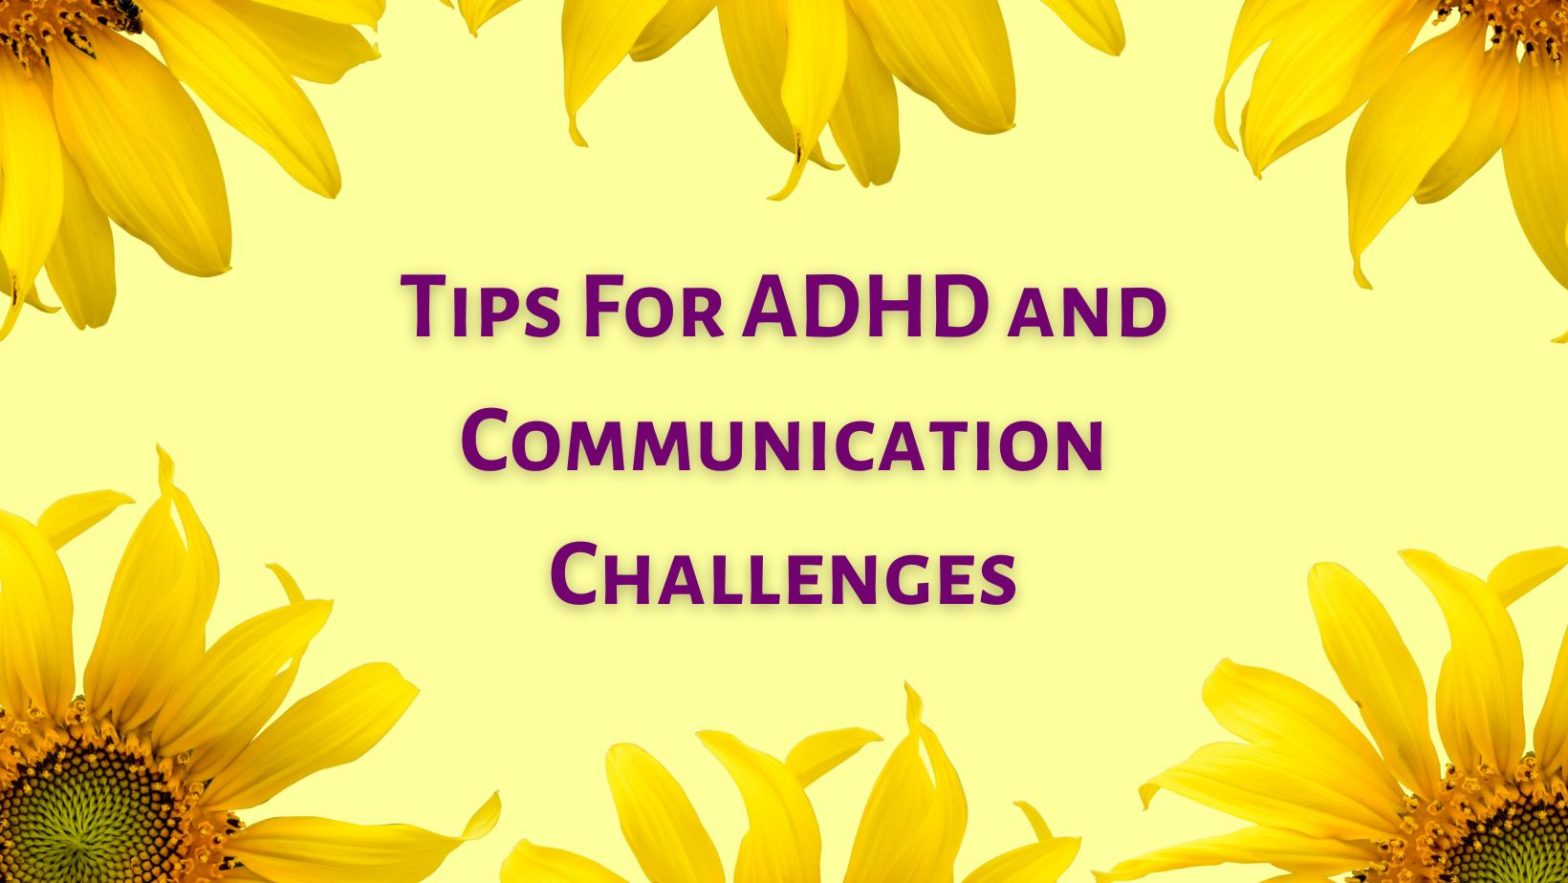 ADHD Communication Tips